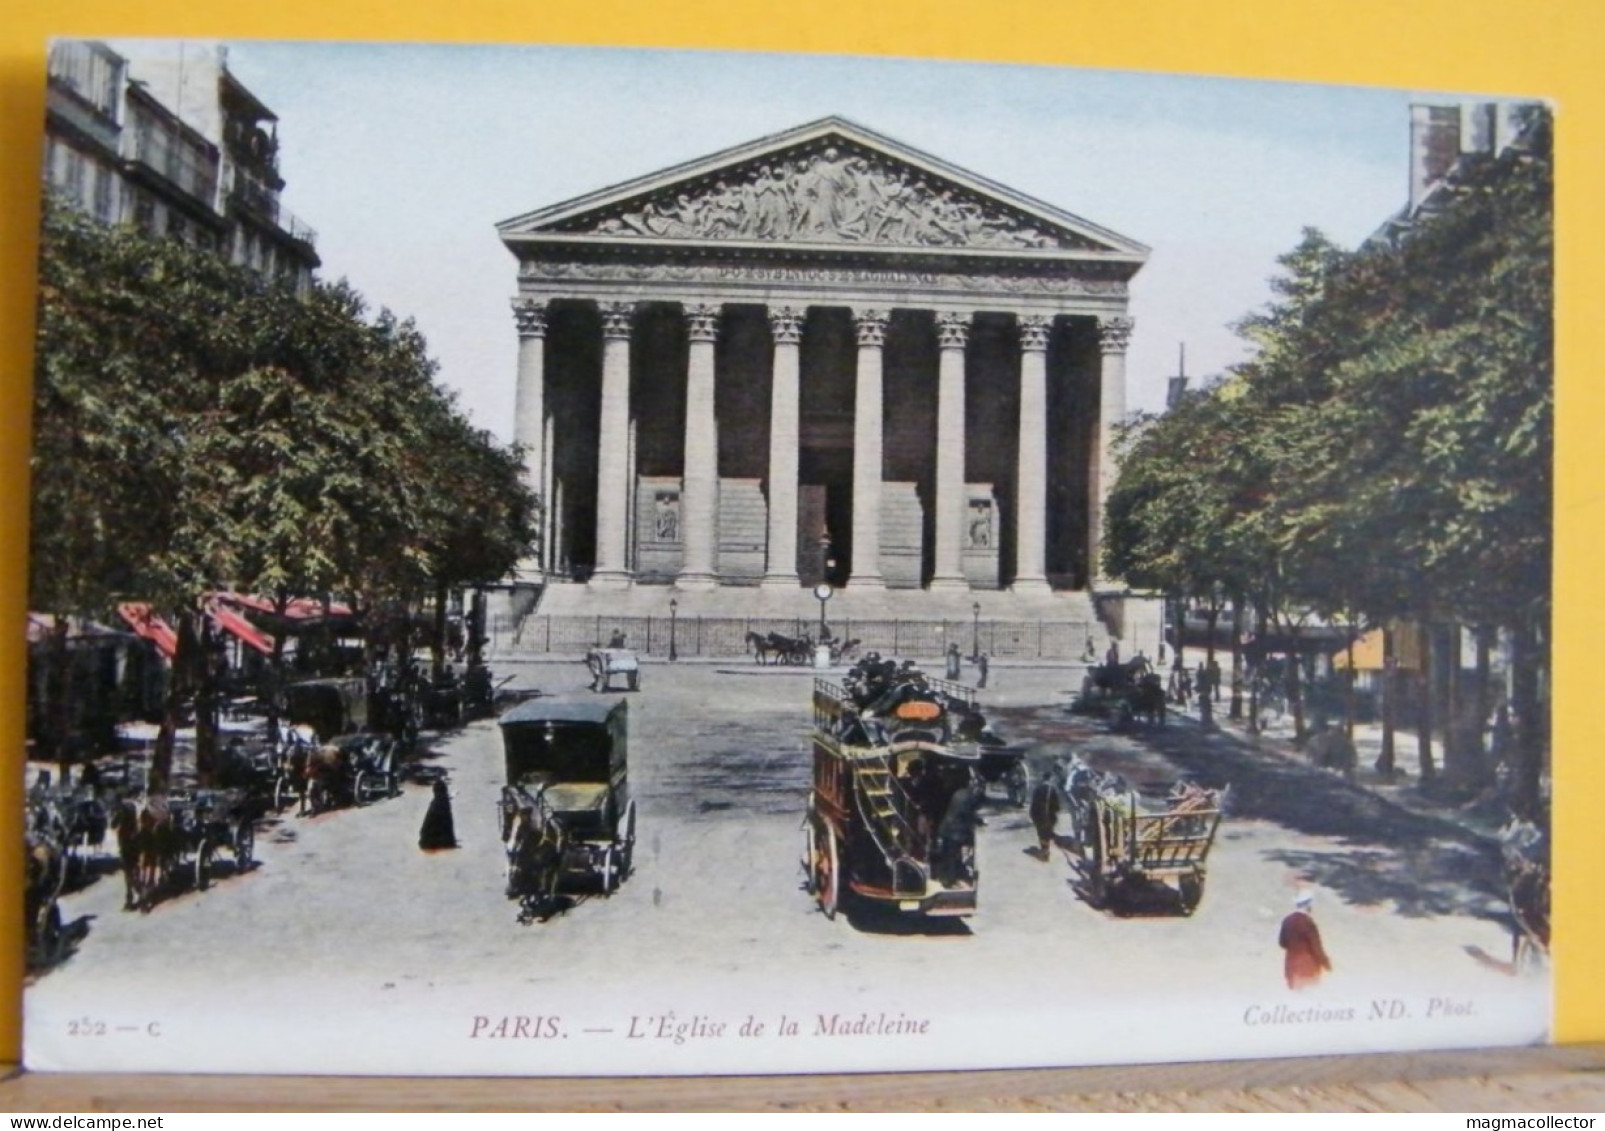 (P1) PARIGI / PARIS - L'EGLISE DE LA MADELEINE - 252-C - NON VIAGGIATA 1910/20ca - Churches